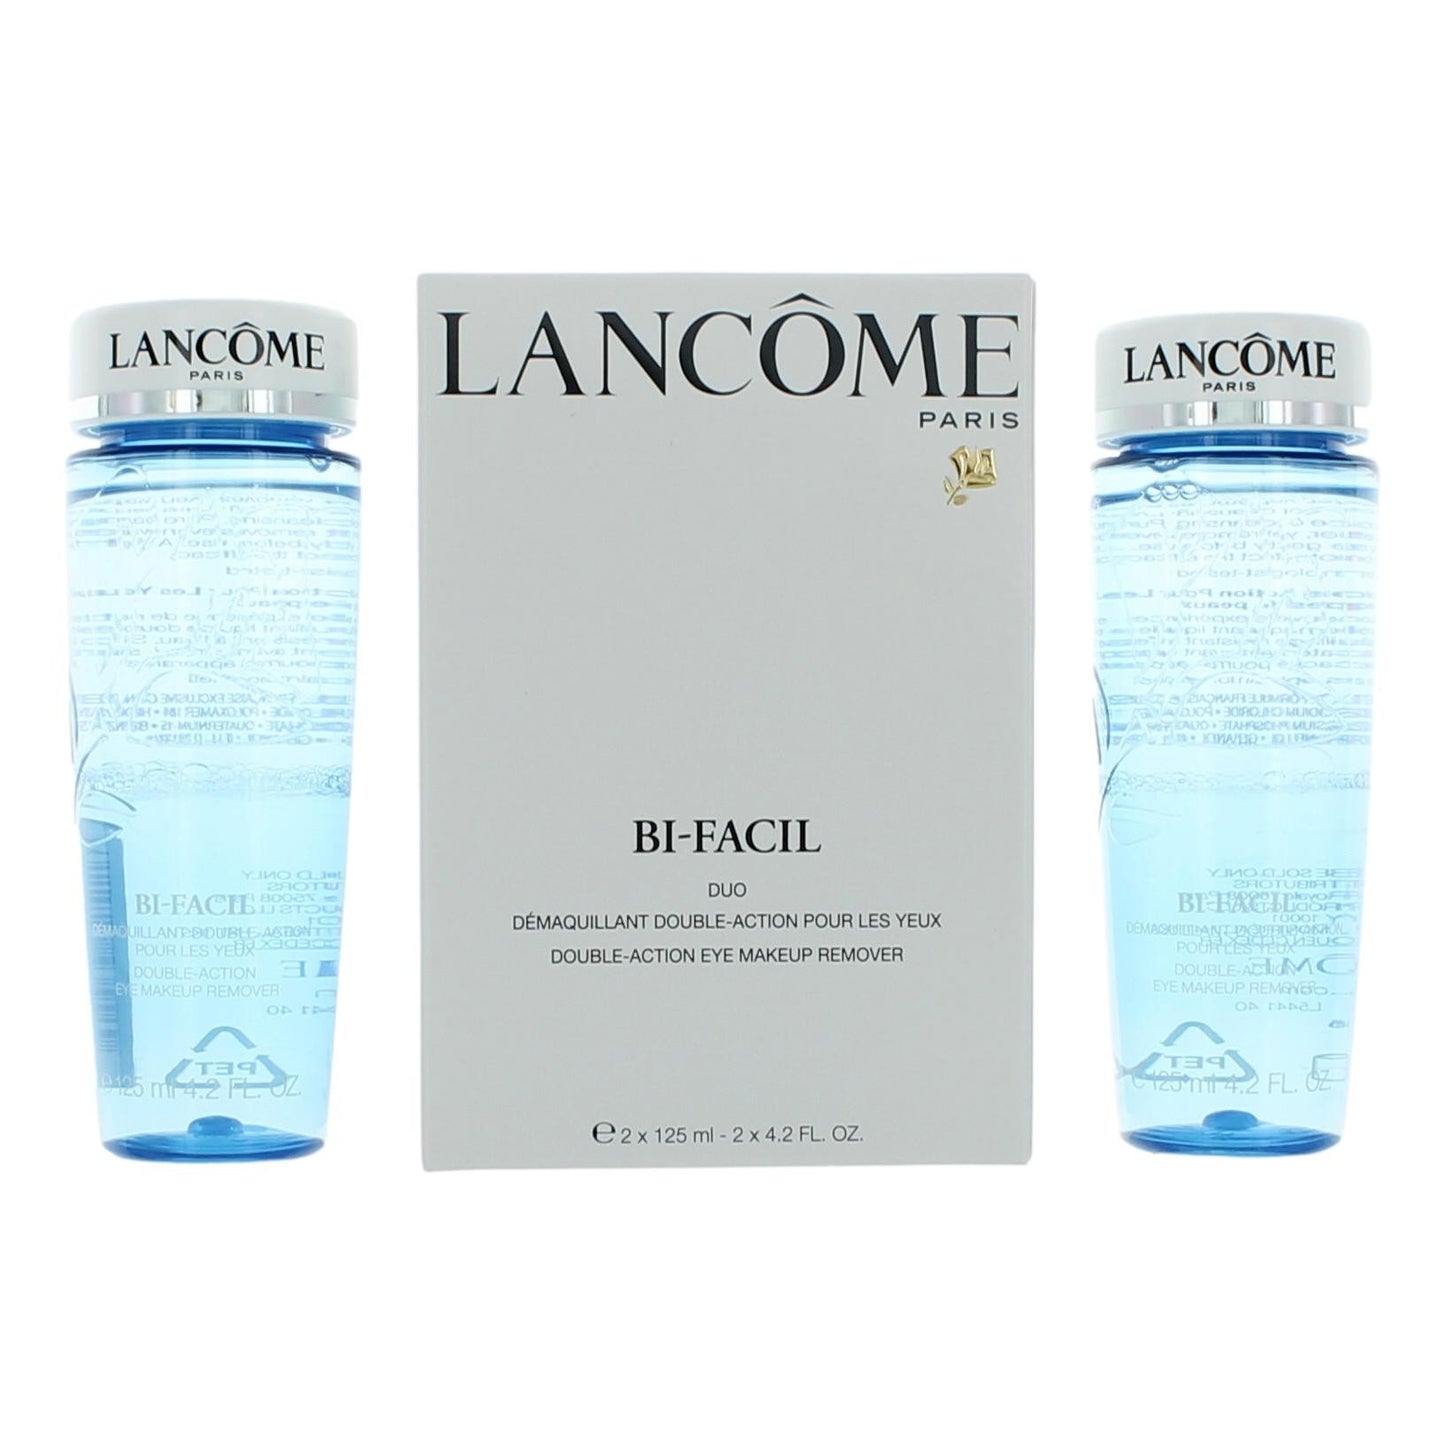 Lancome by Lancome, 2 x 4.2oz Bi-Facil Duo Double-Action Eye Makeup Remover